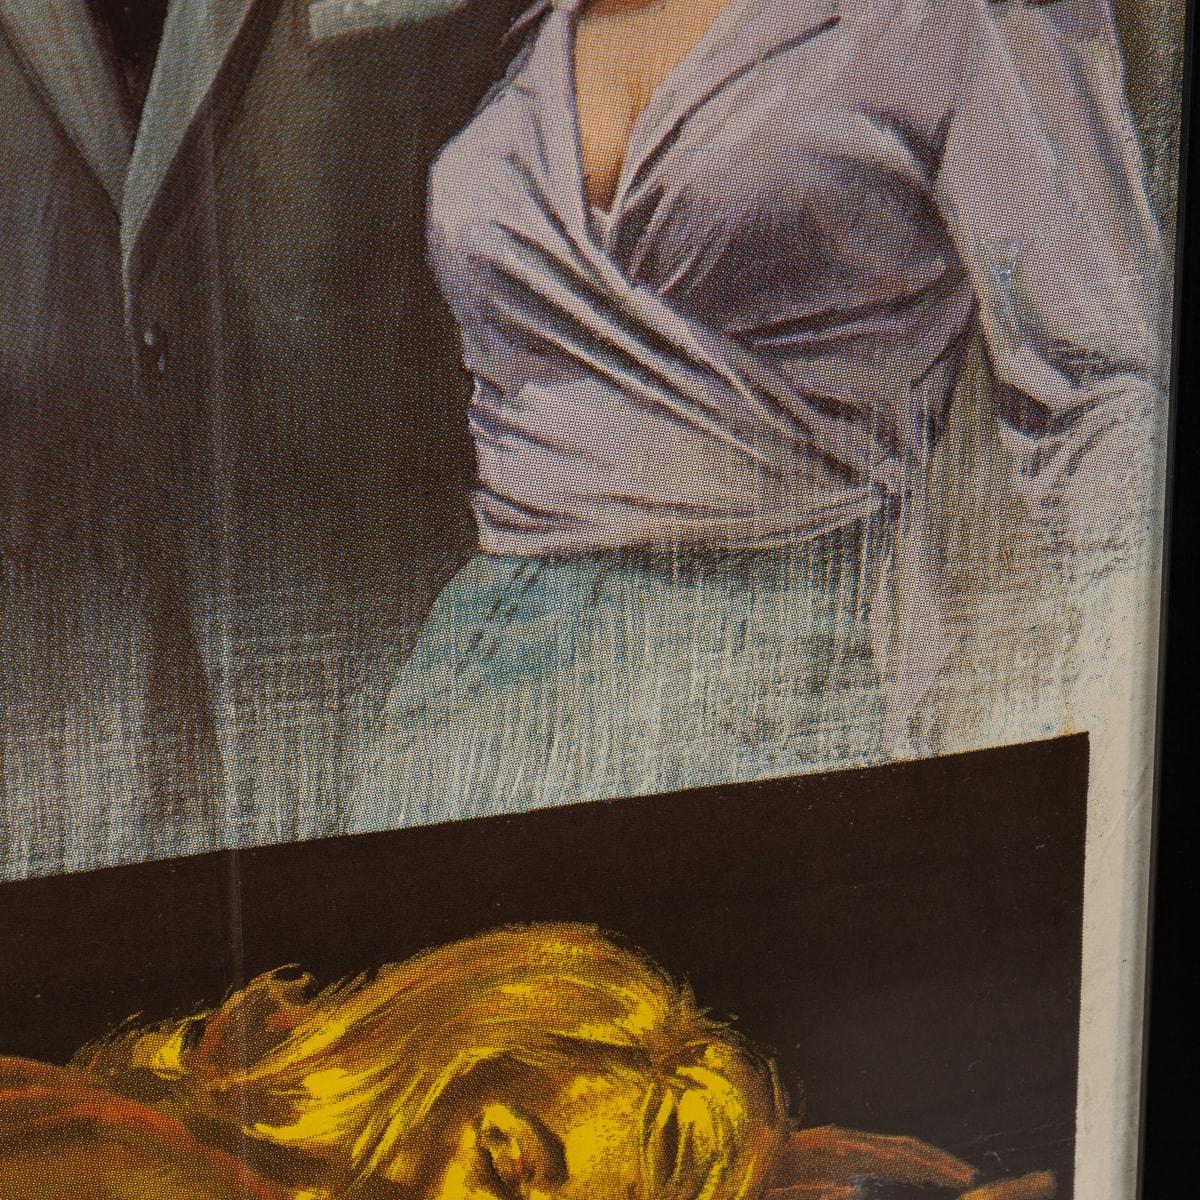 Original French Release James Bond Goldfinger Poster c.1964 For Sale 5